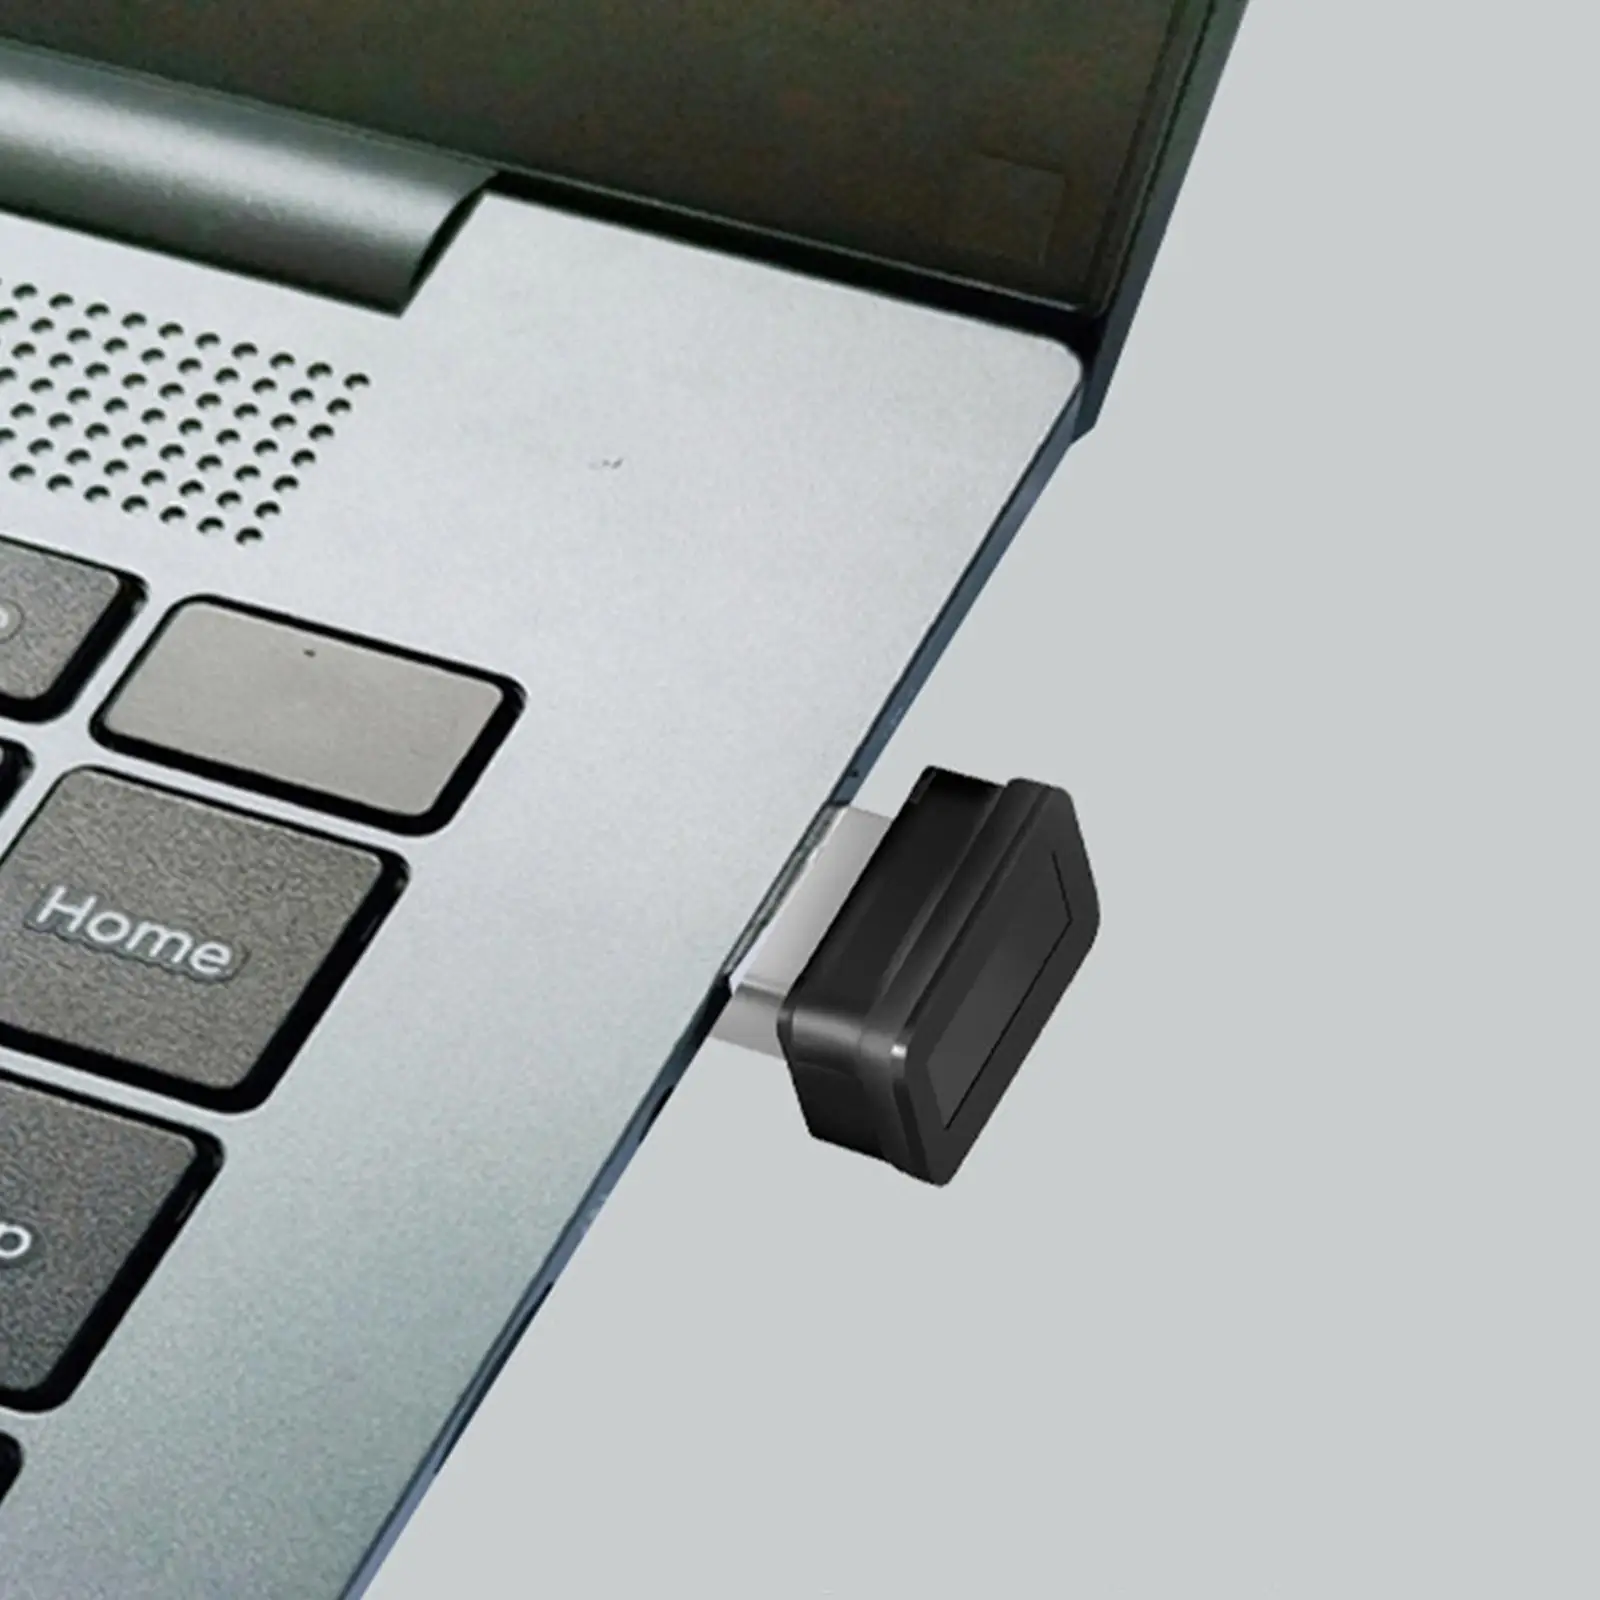 Mini USB Fingerprint Reader 360 Touch Speedy Matching 0.2S Speedy Matching Fingerprint Sensor for Windows 10 Hello